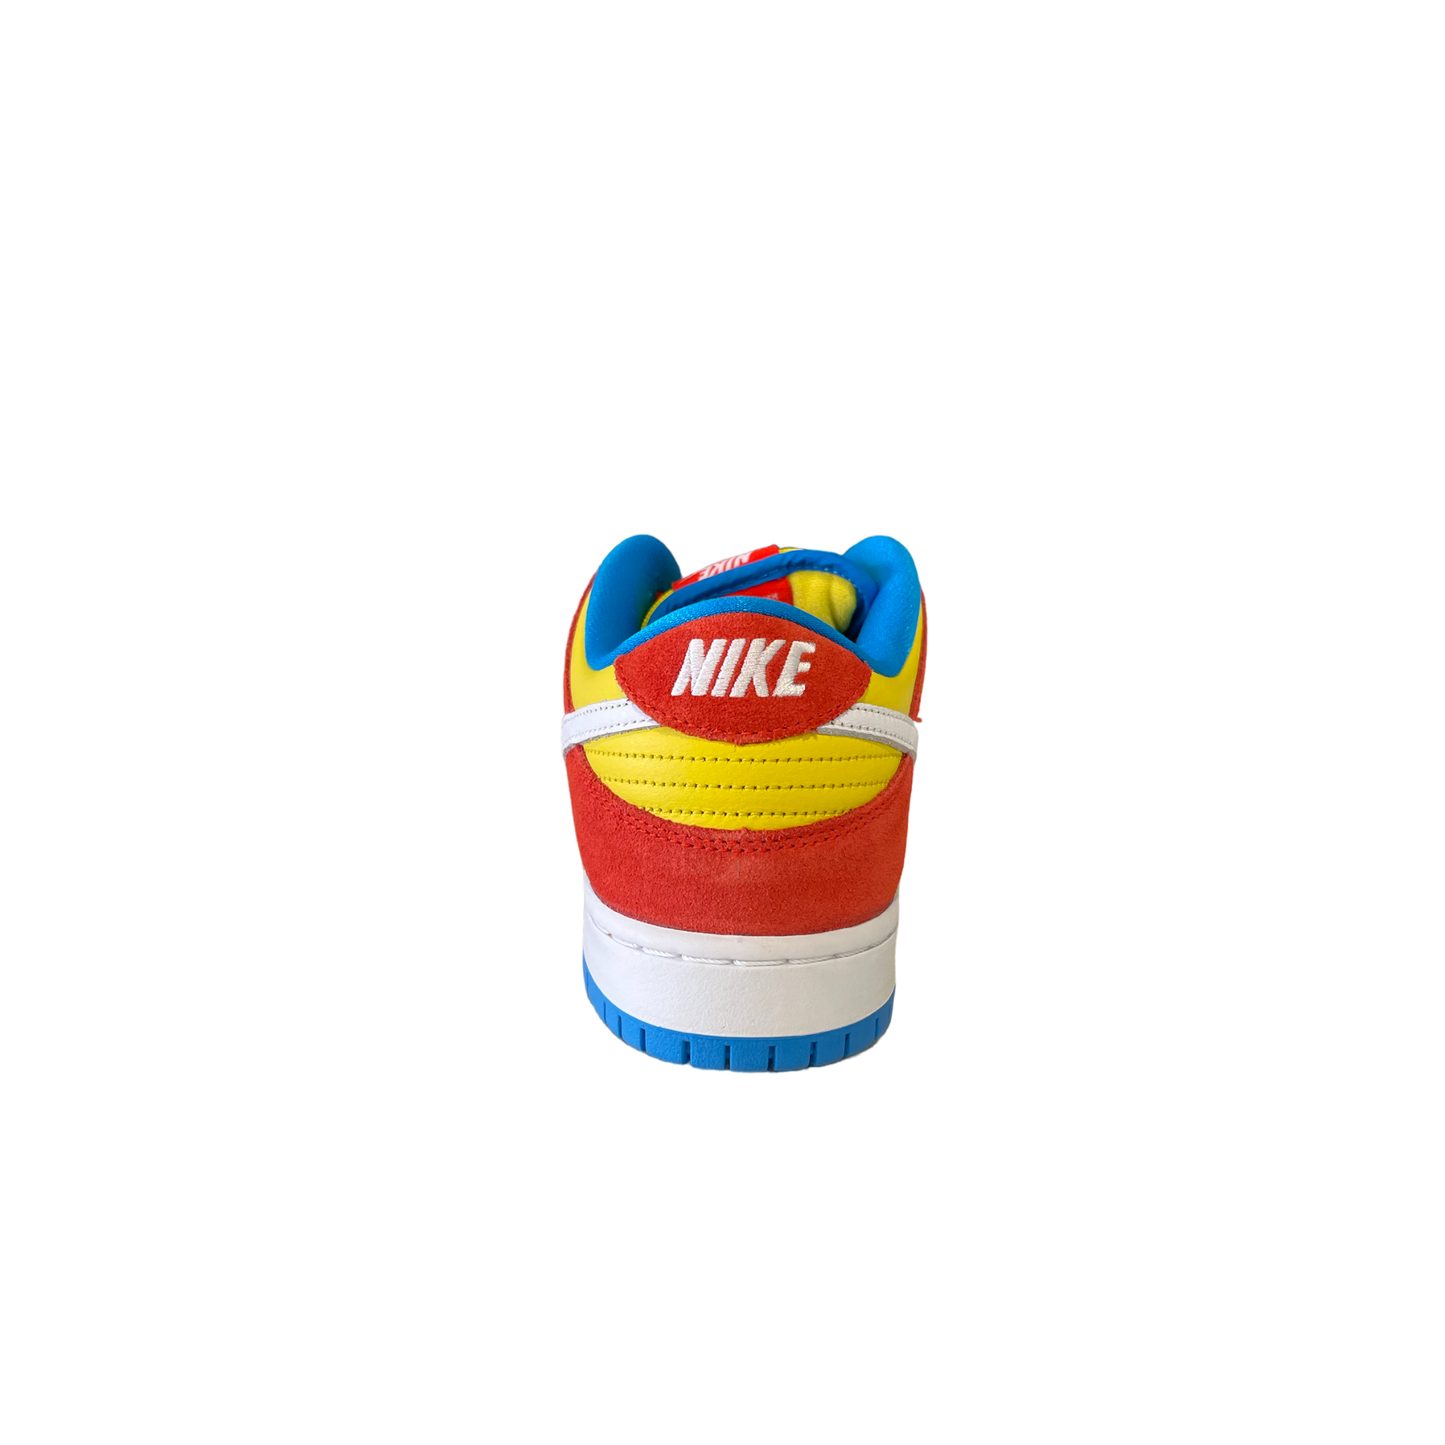 Nike SB Dunk Low Pro Bart Simpson